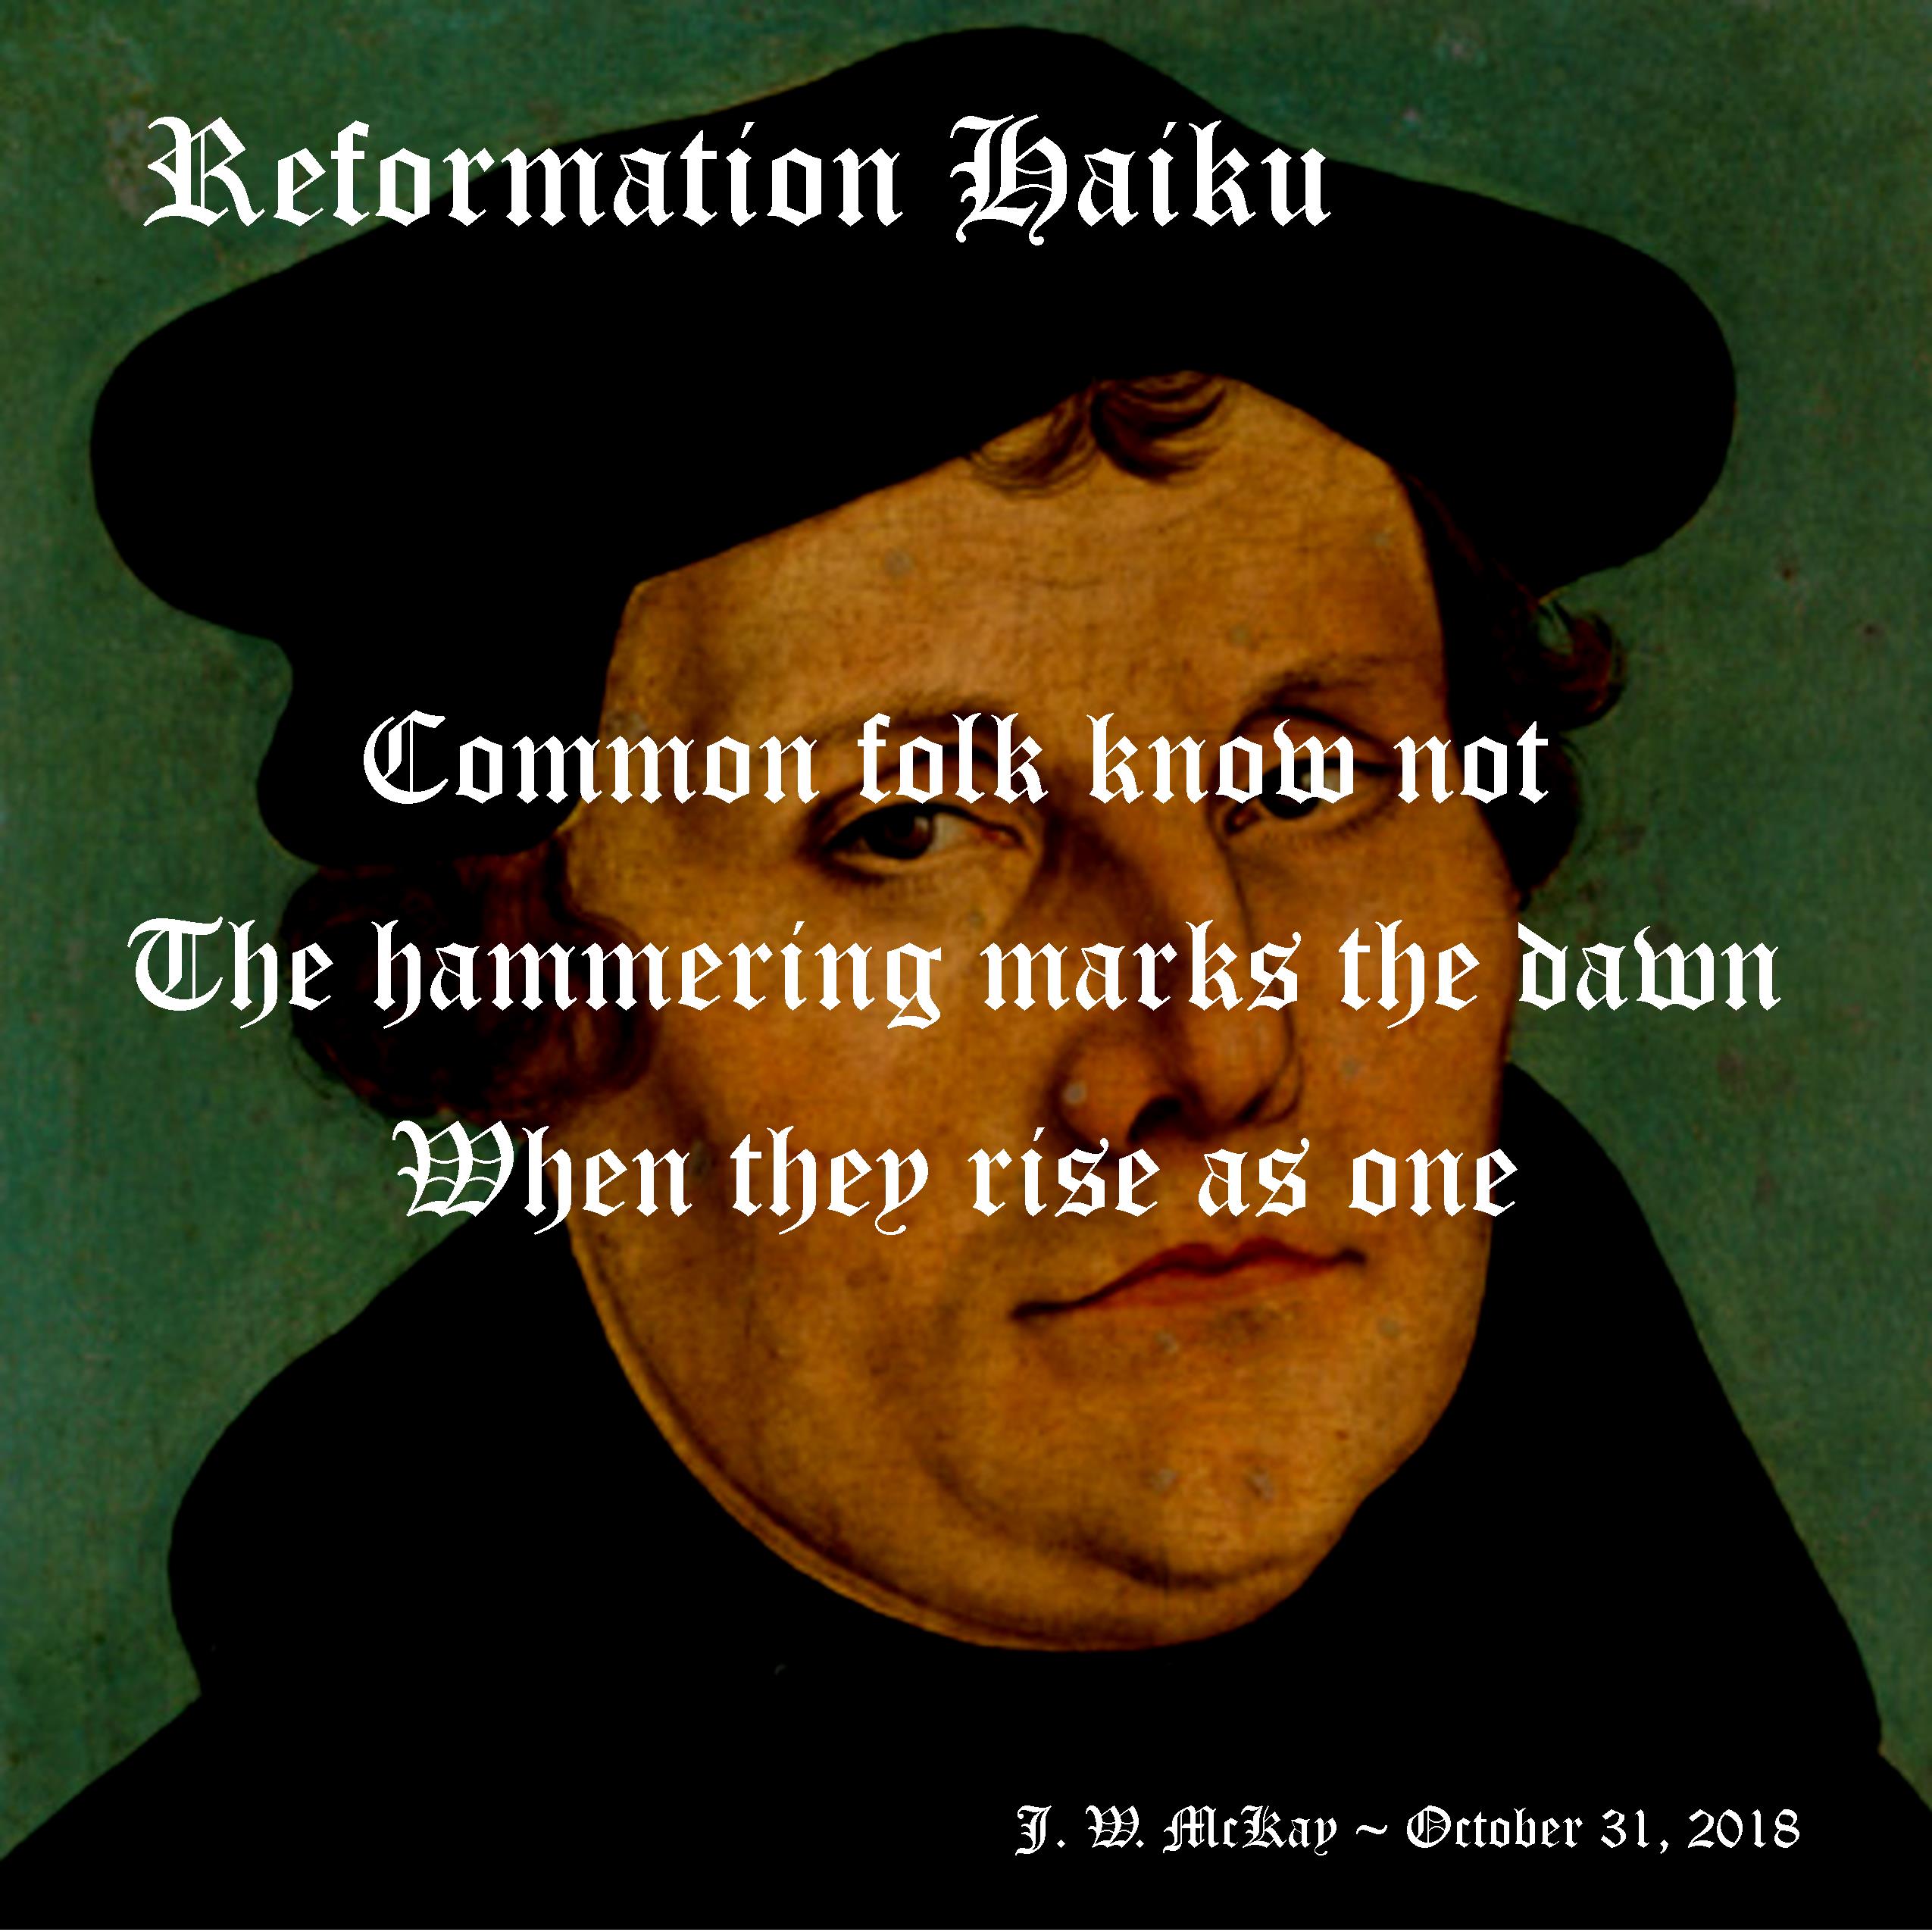 reformation haiku